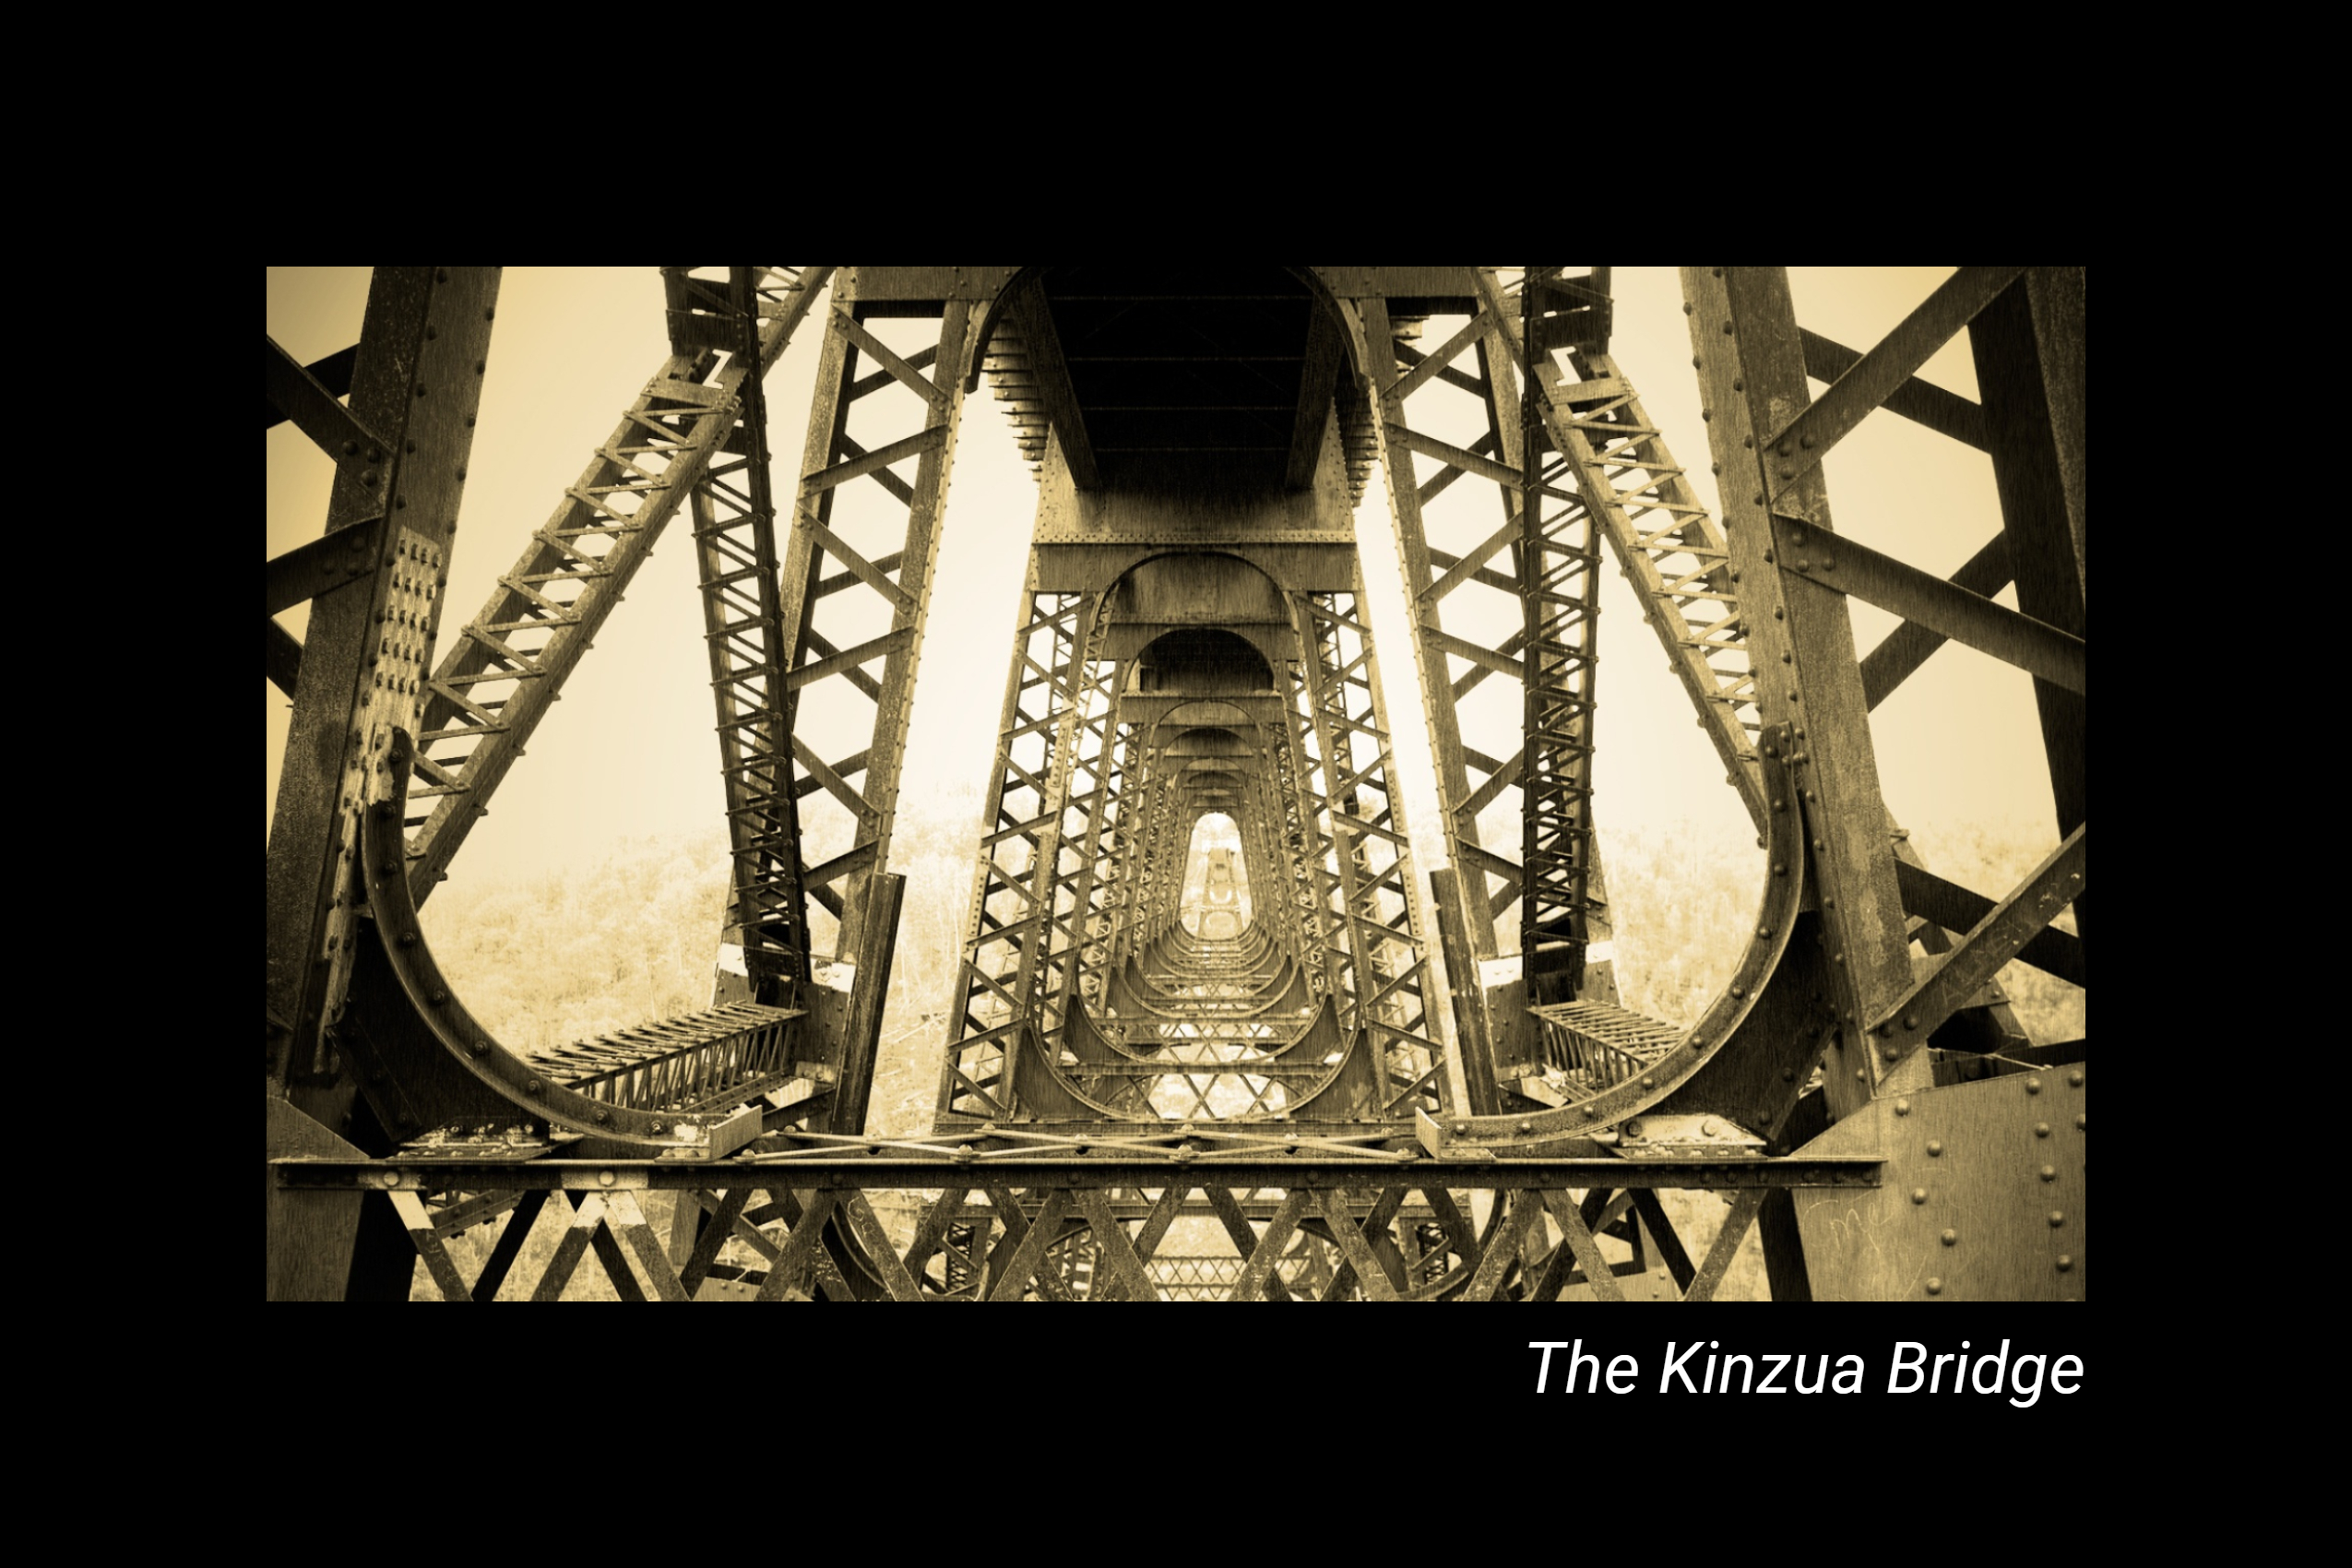 The Kinzua Bridge